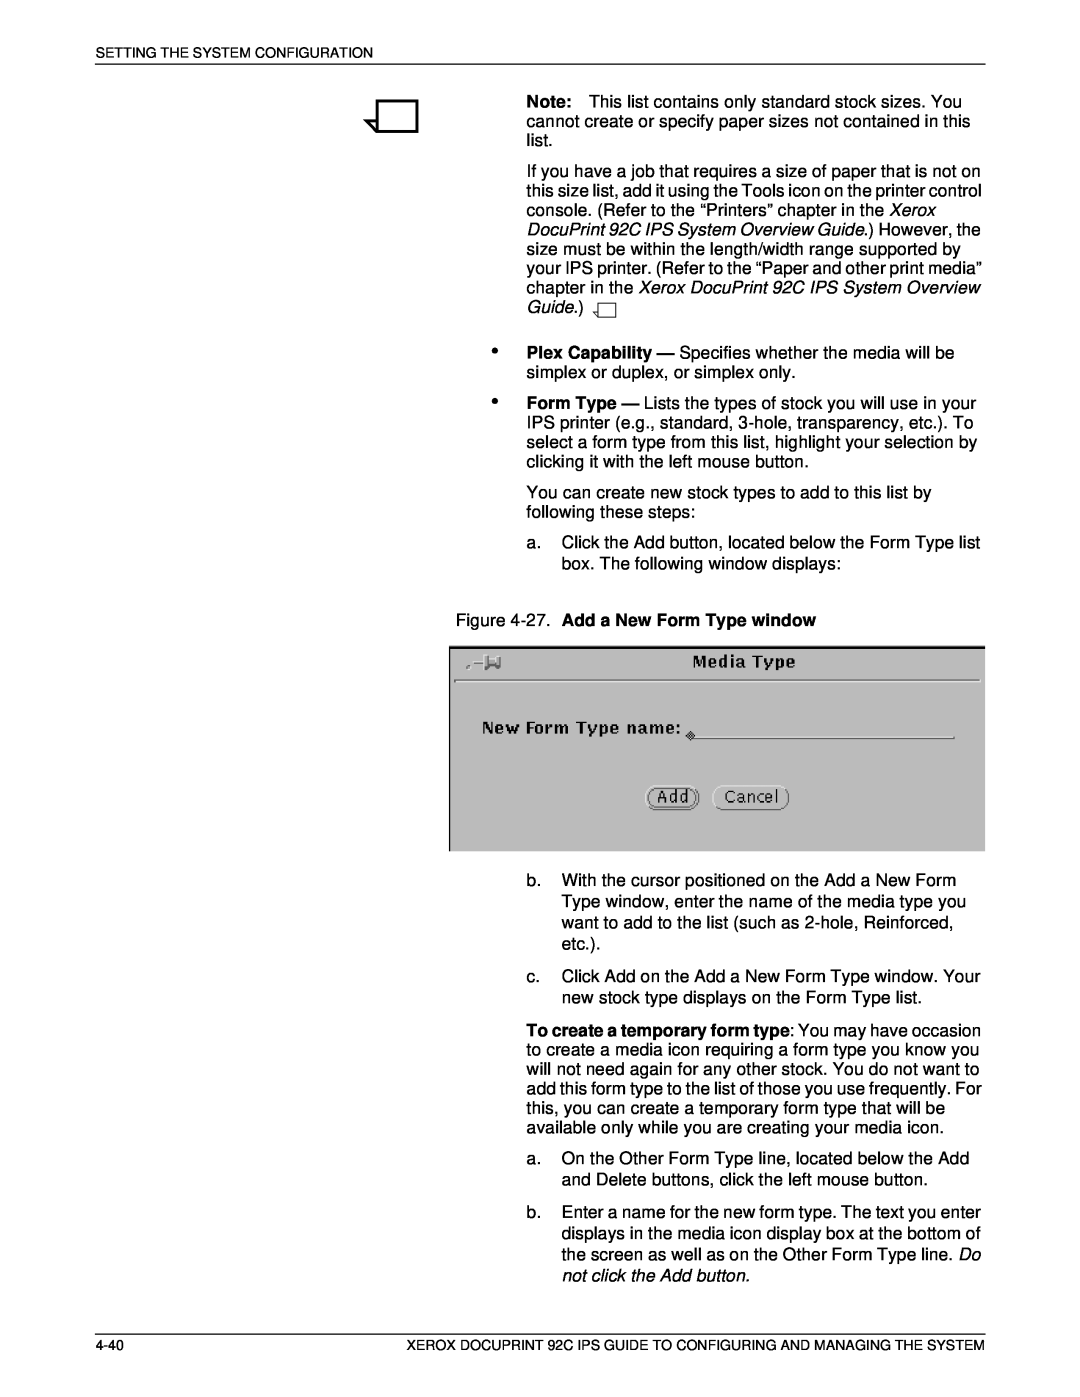 Xerox 92C IPS manual 27. Add a New Form Type window 